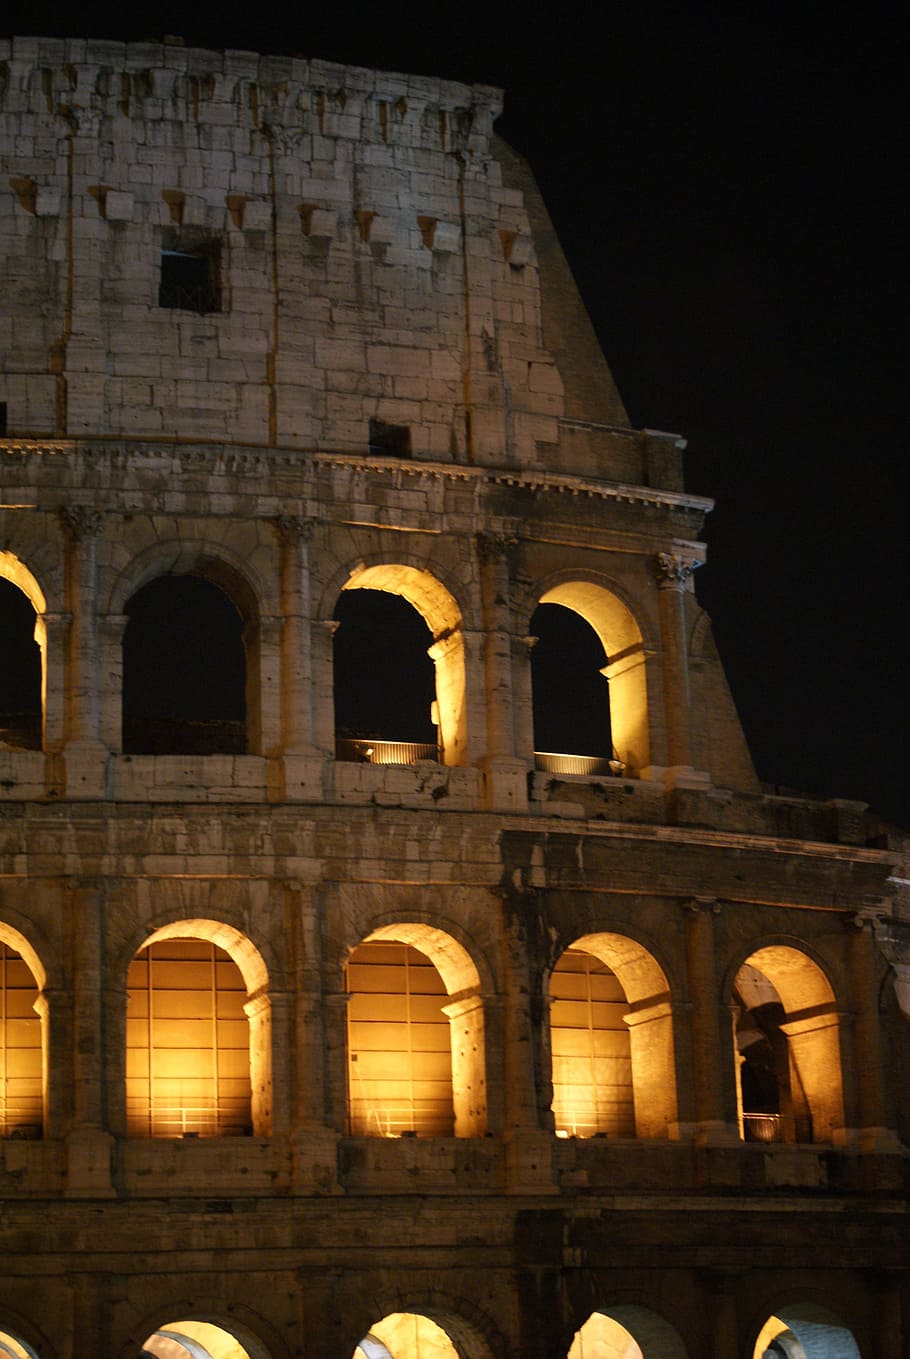 Coliseum, Rome, Monument, the coliseum, arch, history, architecture, travel destinations, old ruin, ancient